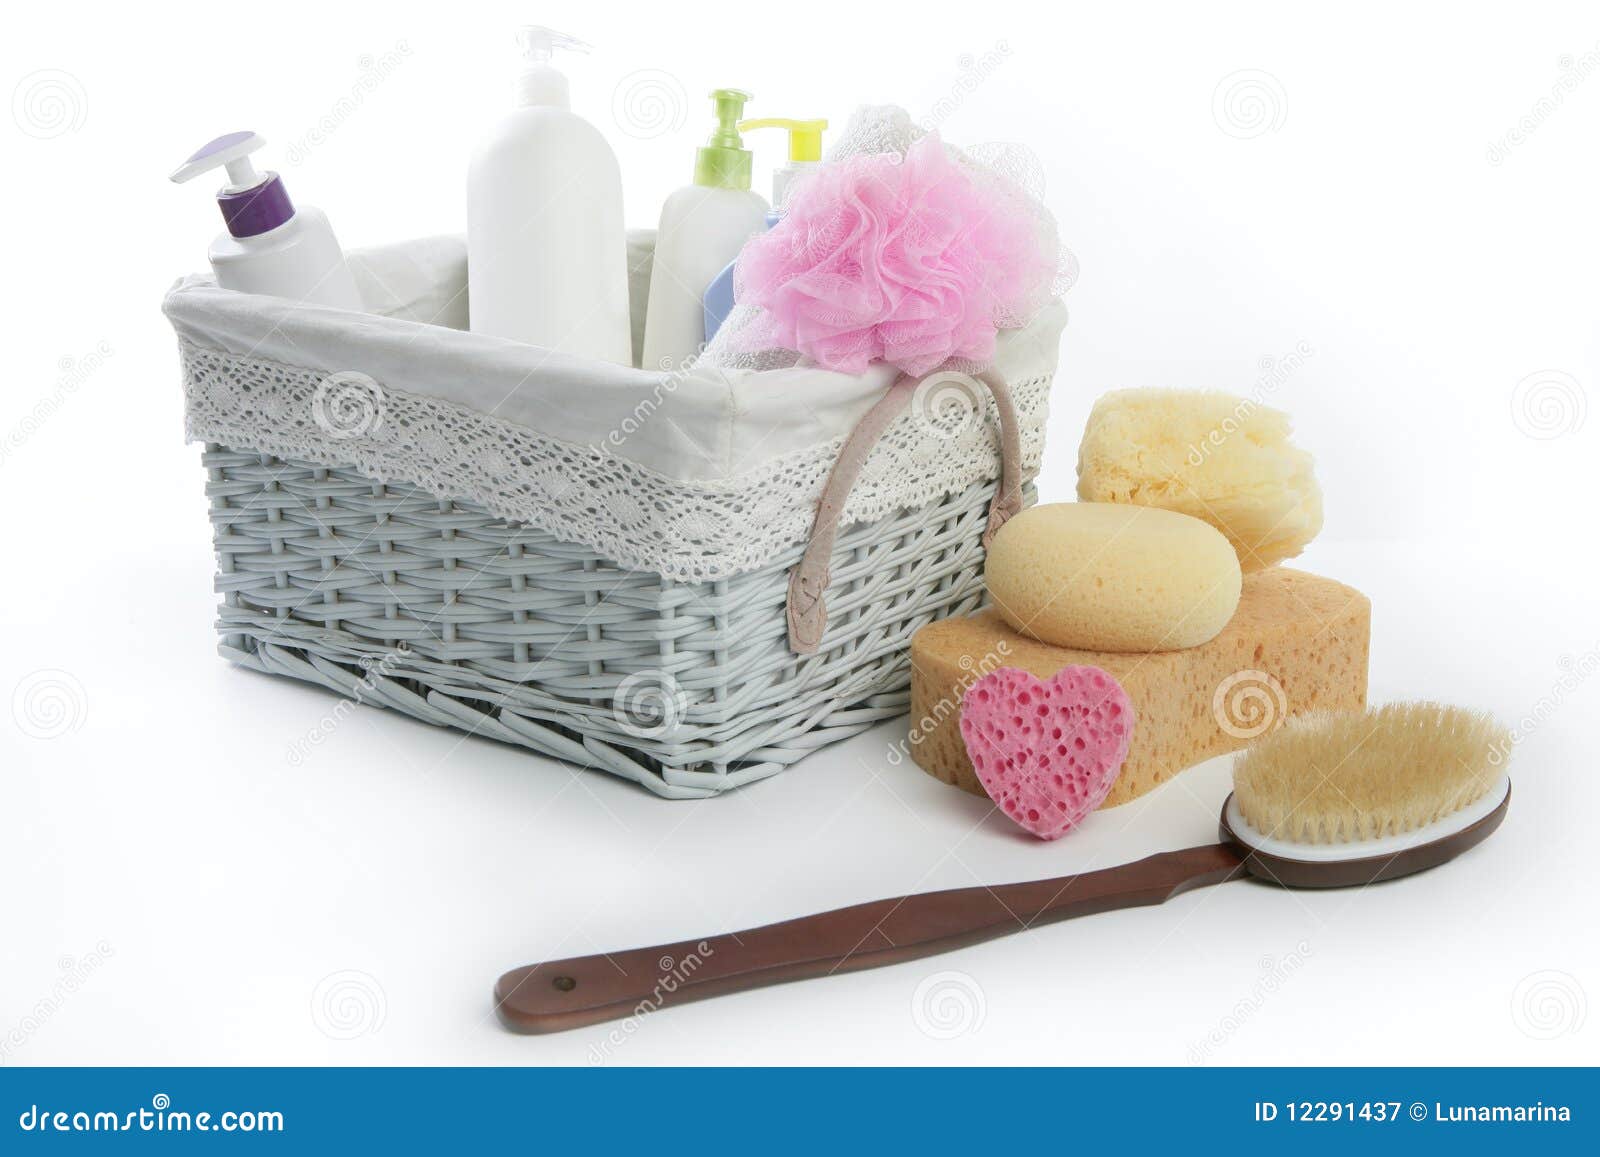 bath toiletries basket with shower gel